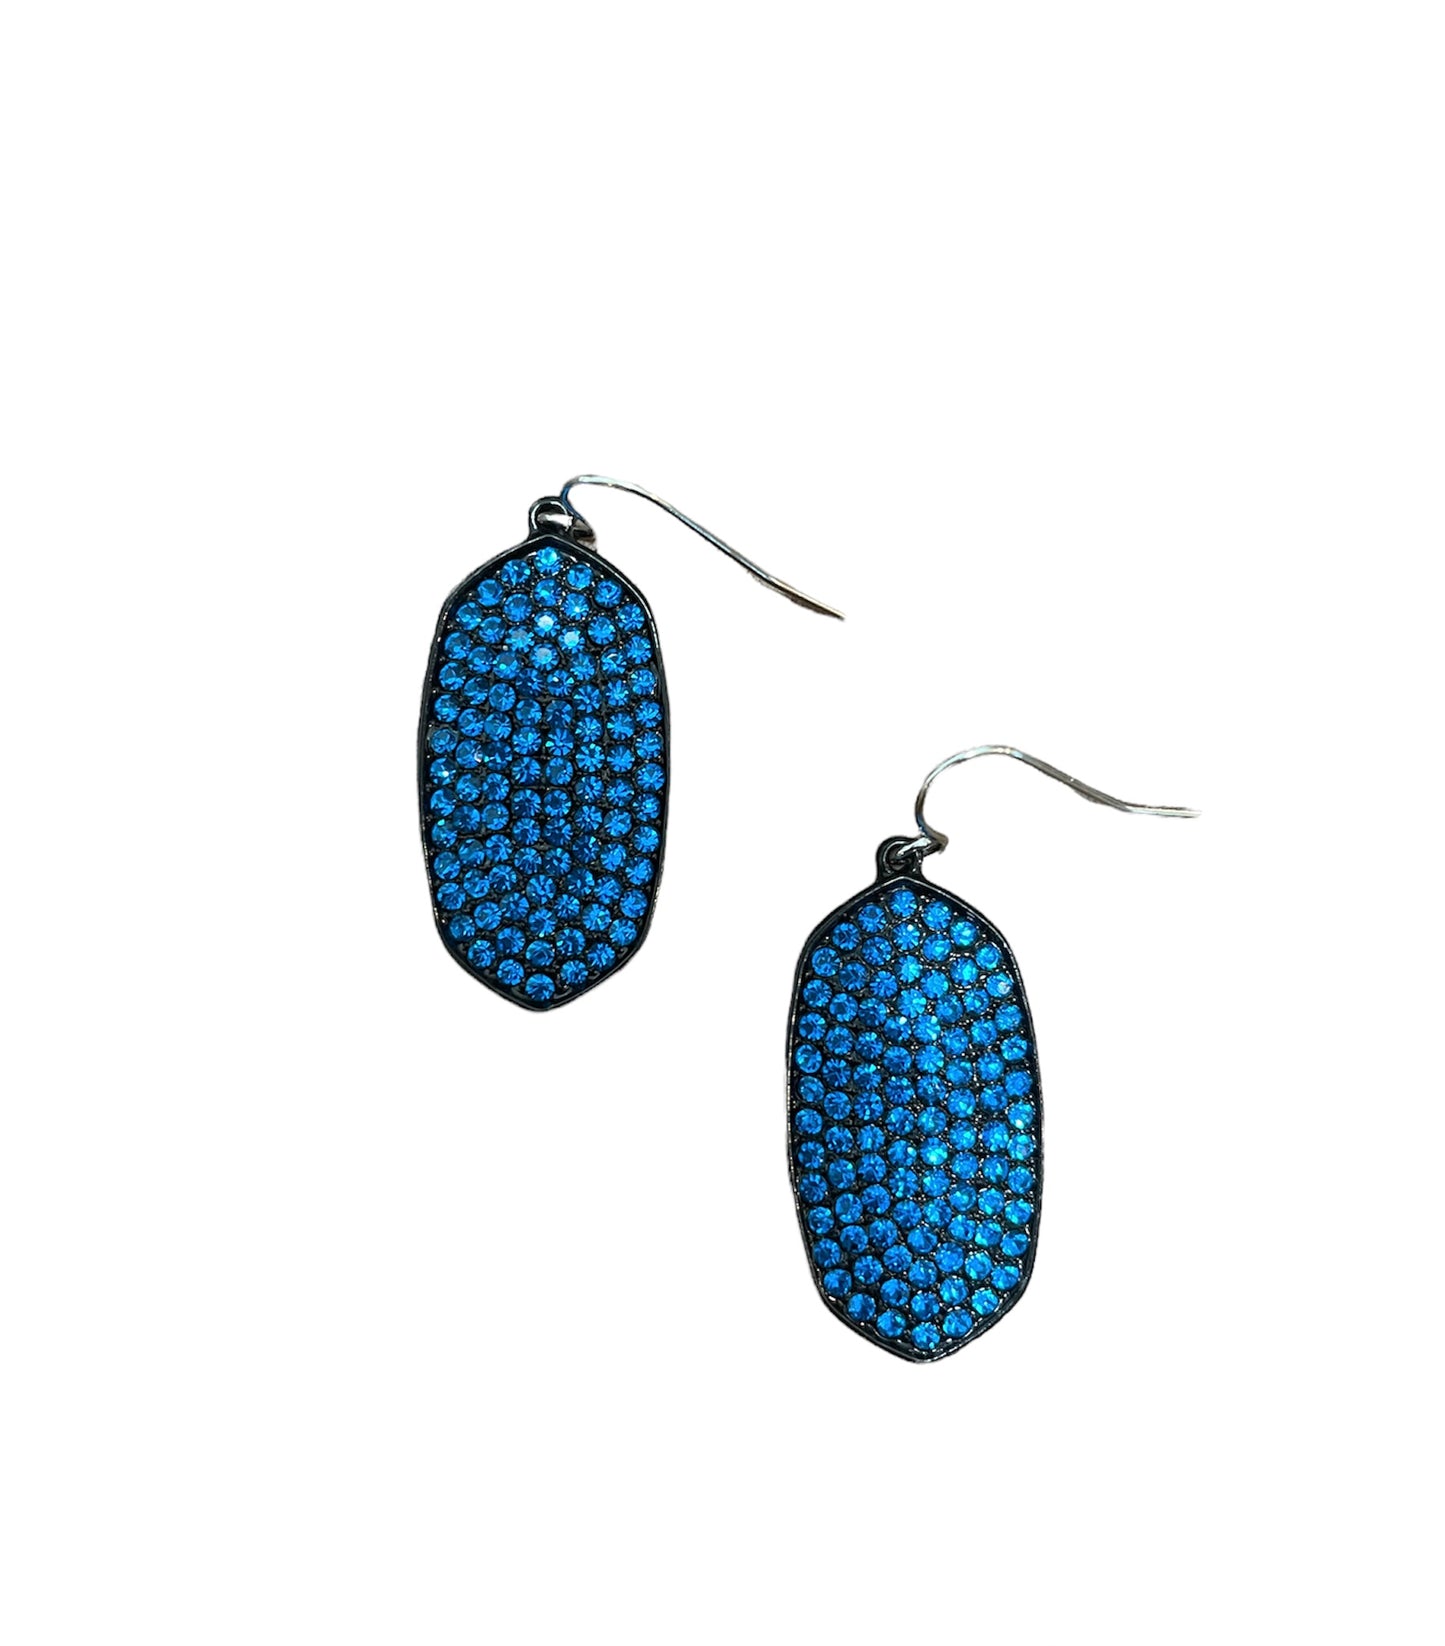 Black Earring with Blue Rhinestones